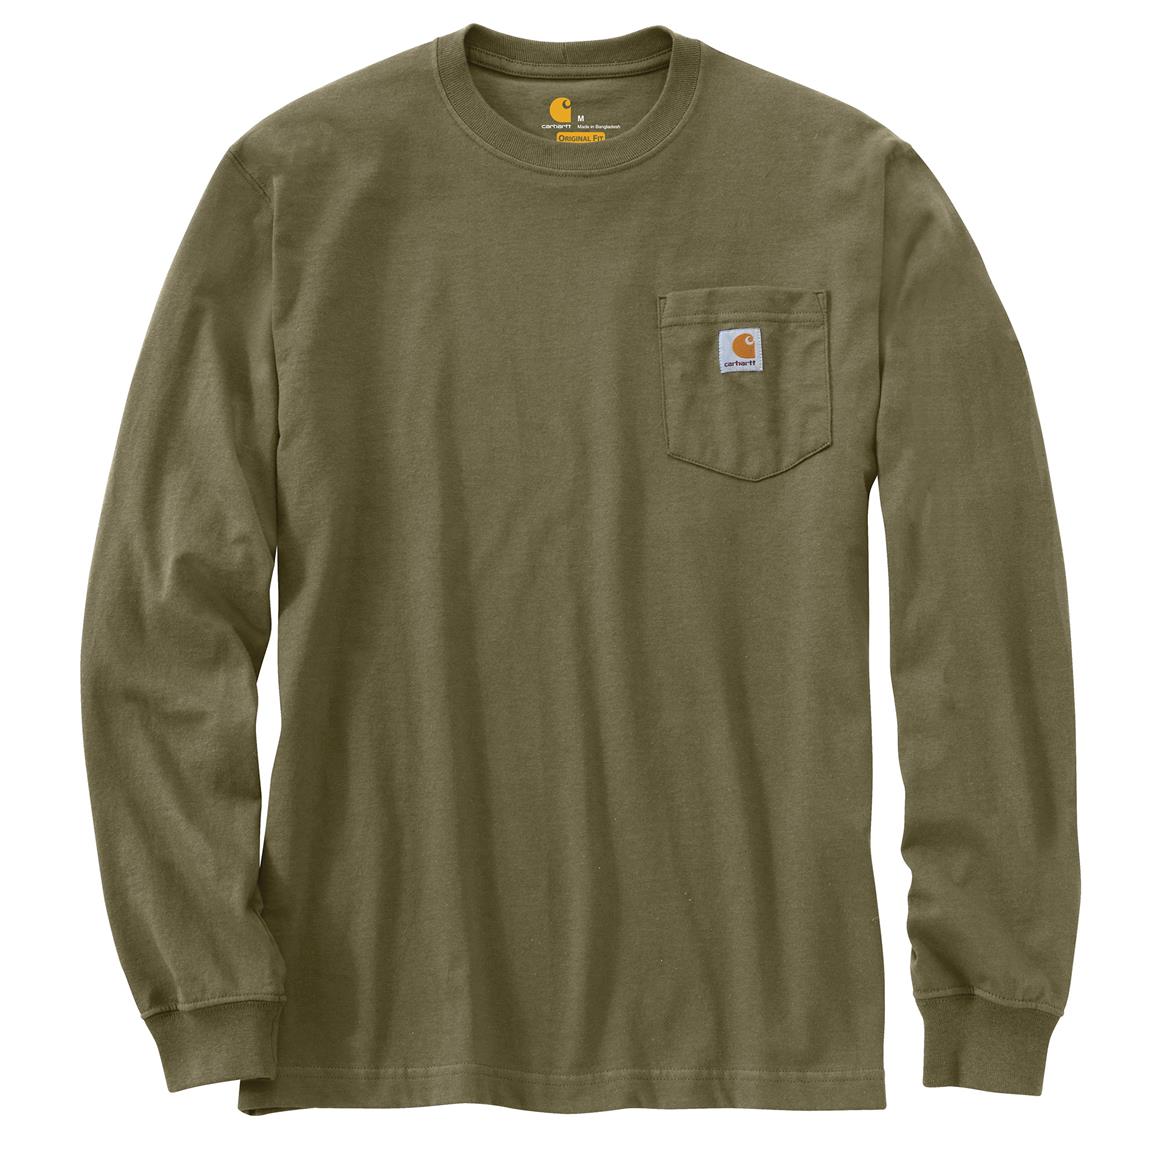 Carhartt Men's Workwear Long-Sleeve Pocket T-Shirt - 209316, T-Shirts at Sportsman's Guide